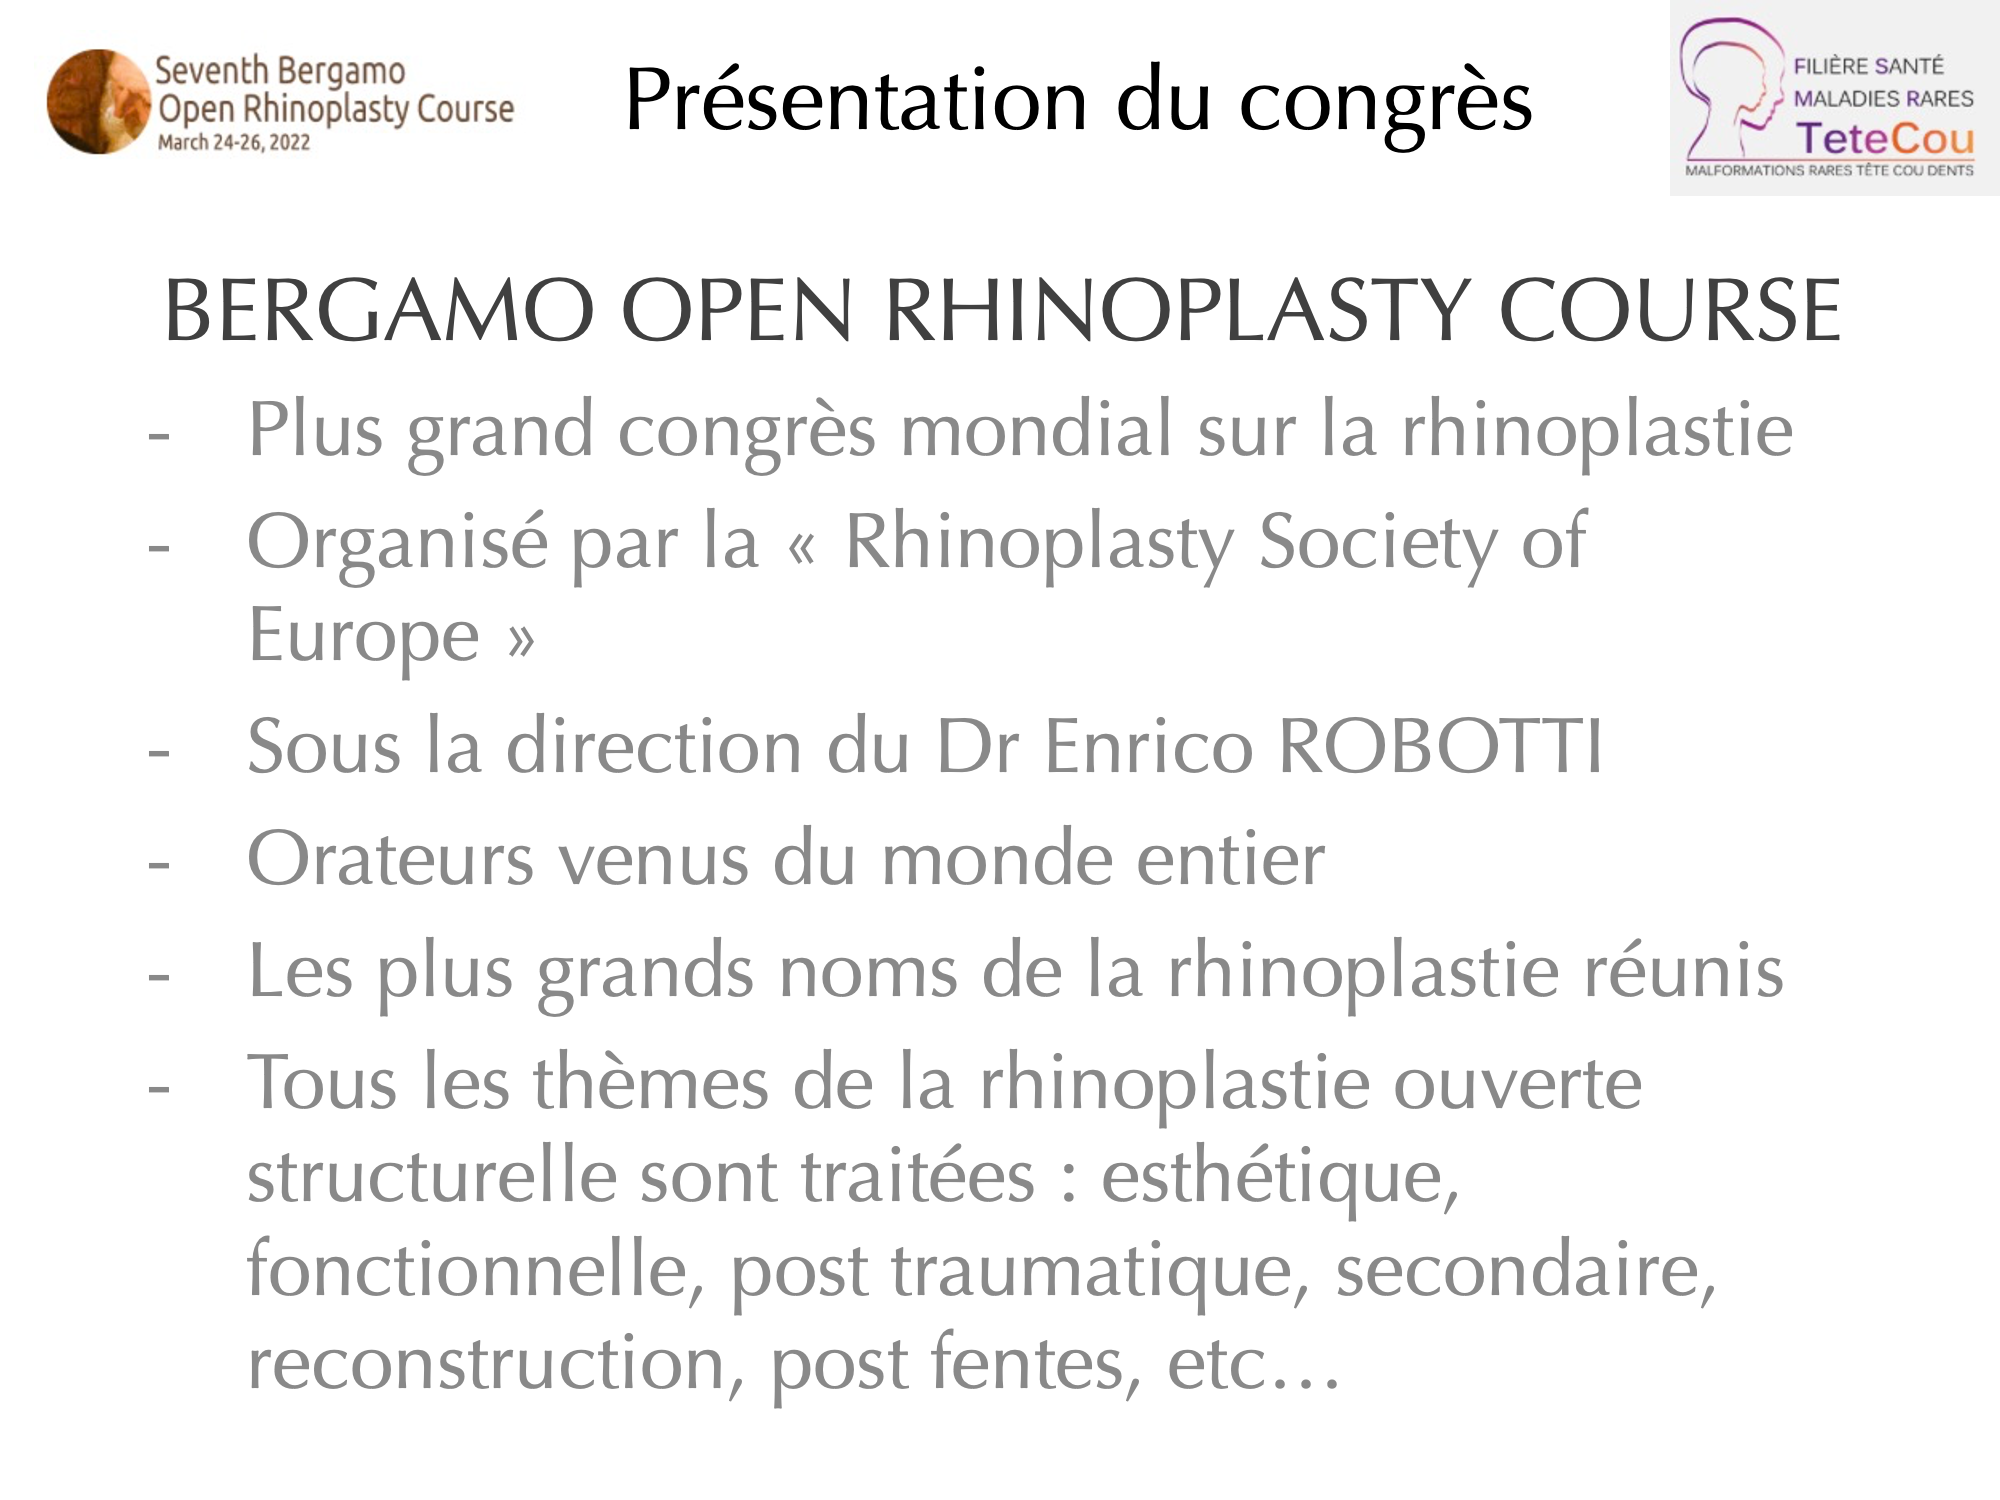 Image Retour JB Caruhel Bergamo rhinoplasty course 4